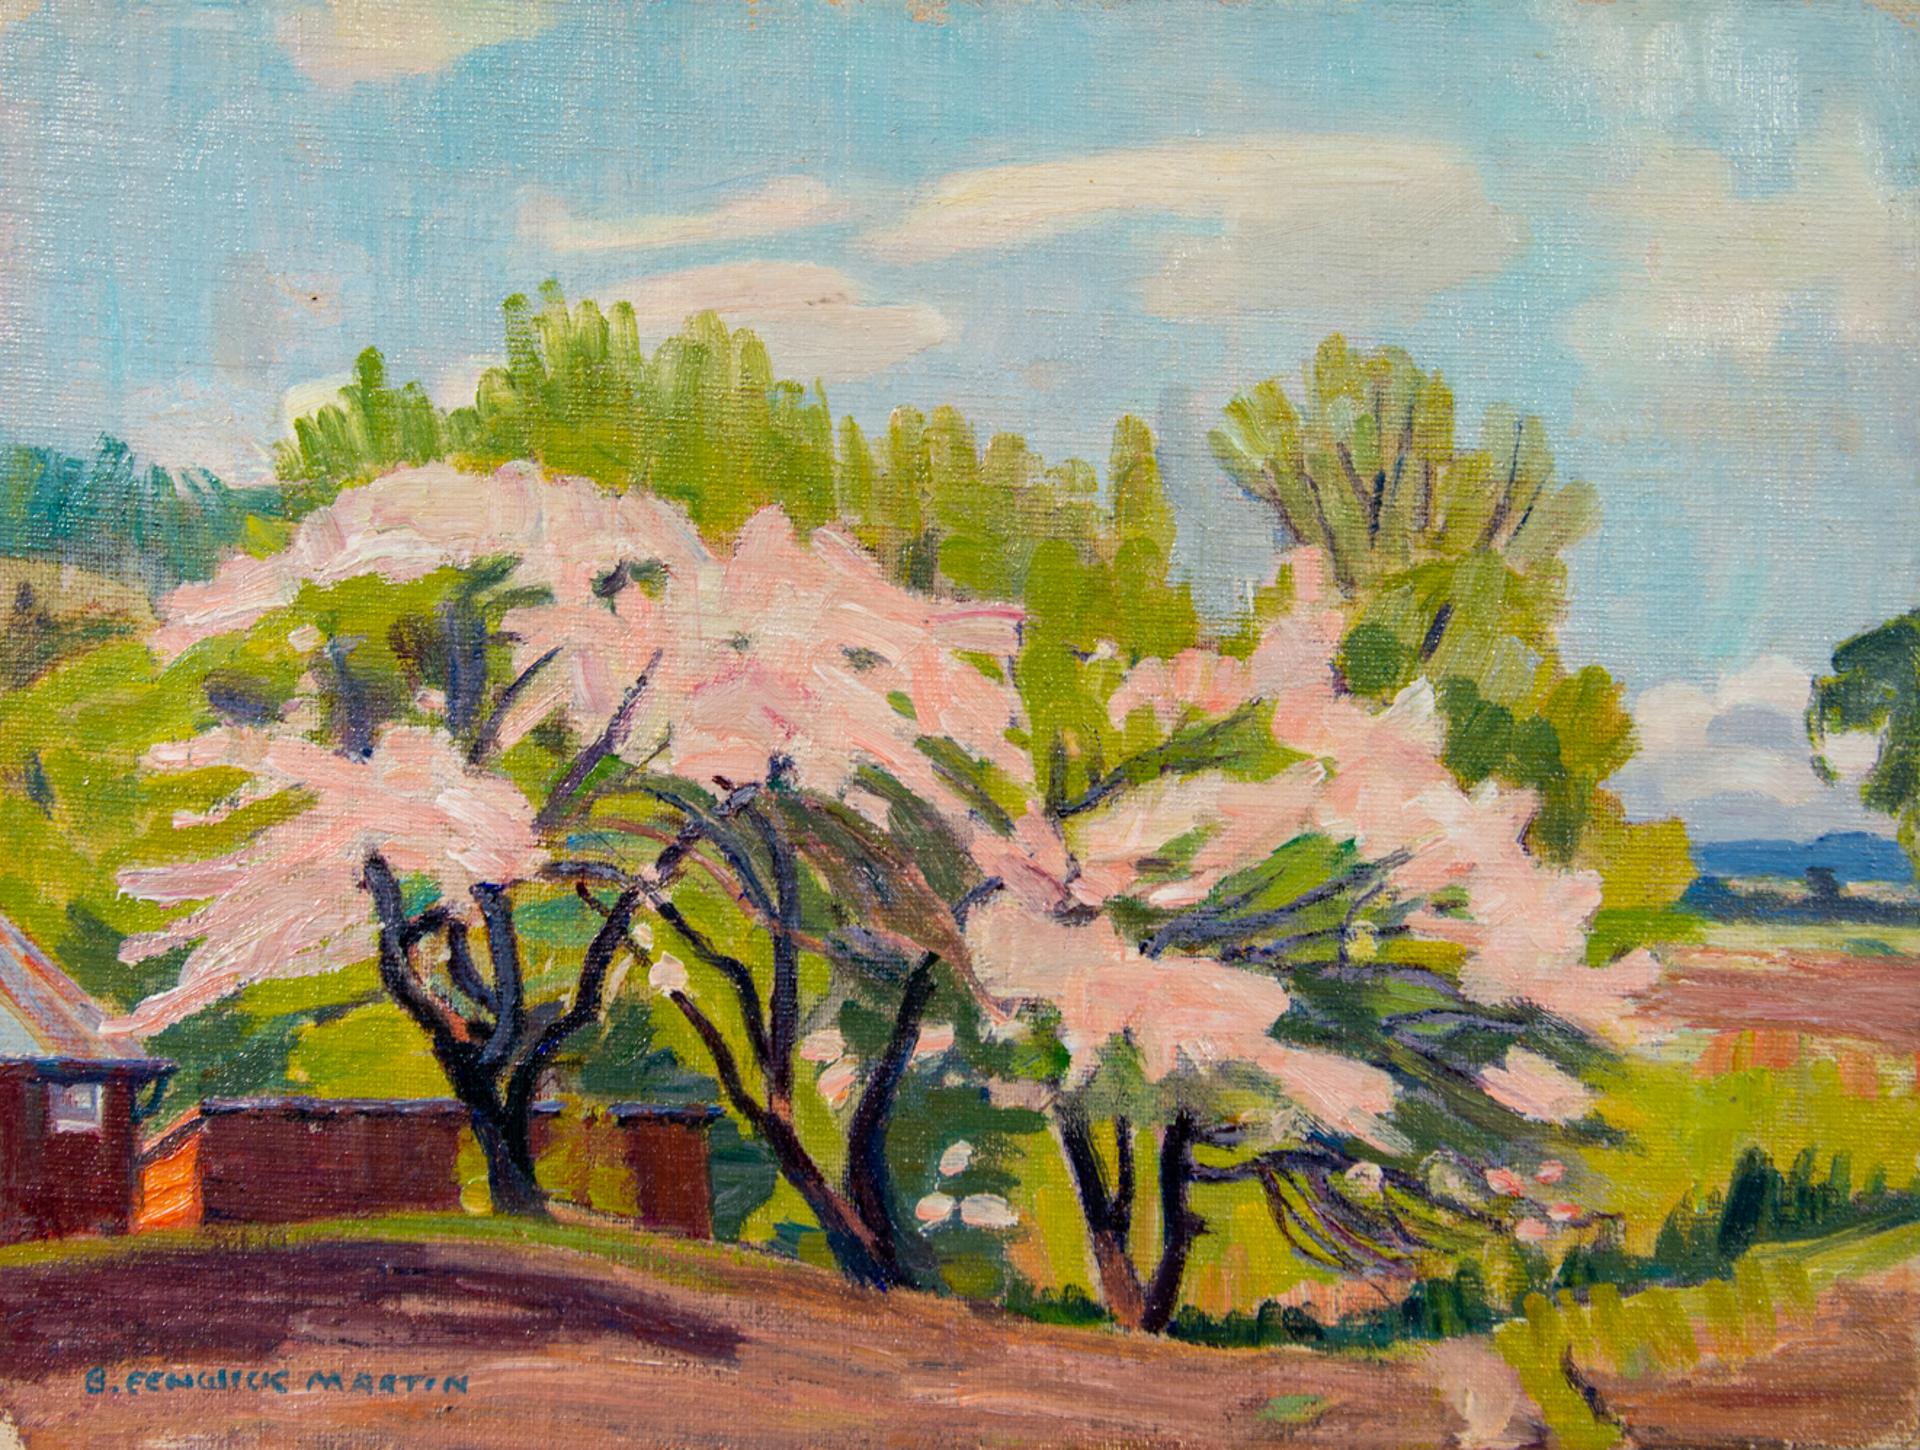 Bernice Fenwick Martin (1902-1999) - Apple Blossoms, n. d.